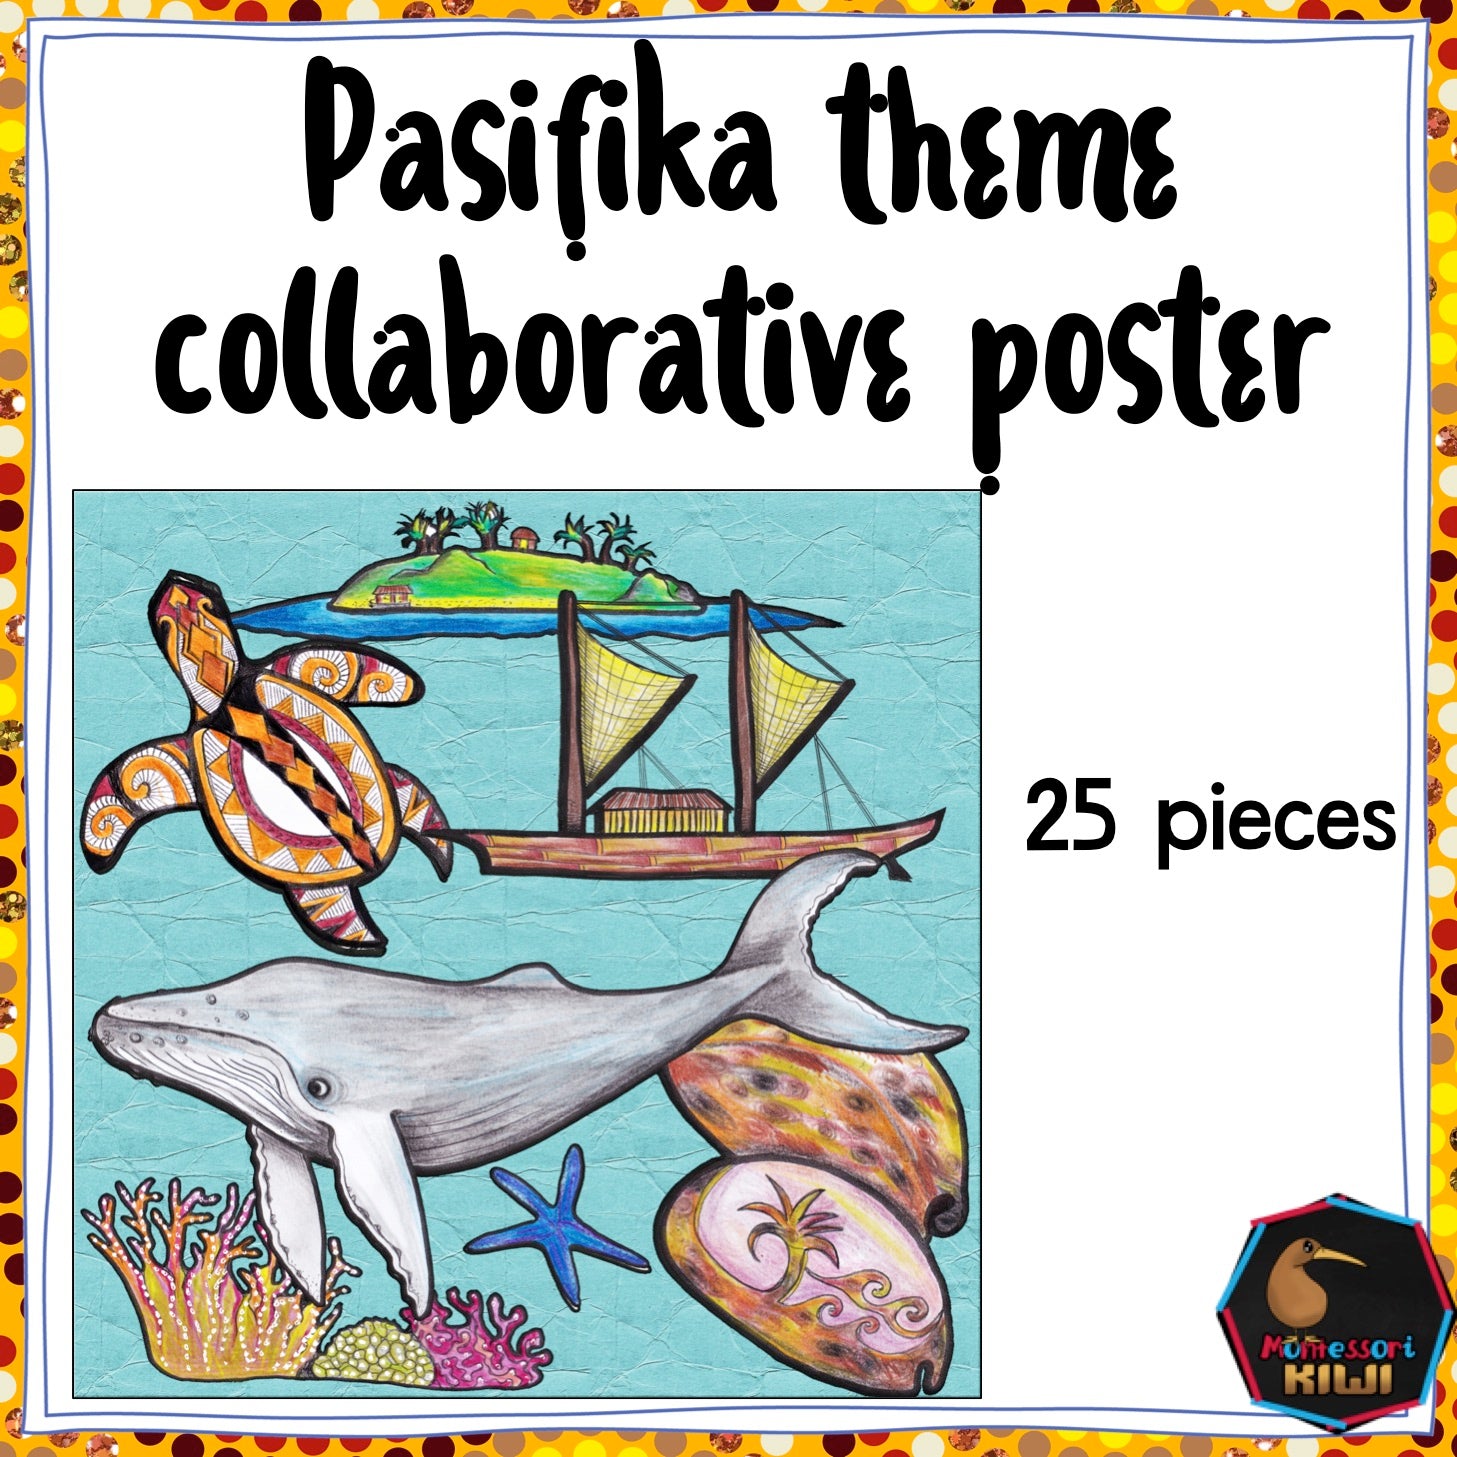 Pasifika collaborative poster - montessorikiwi